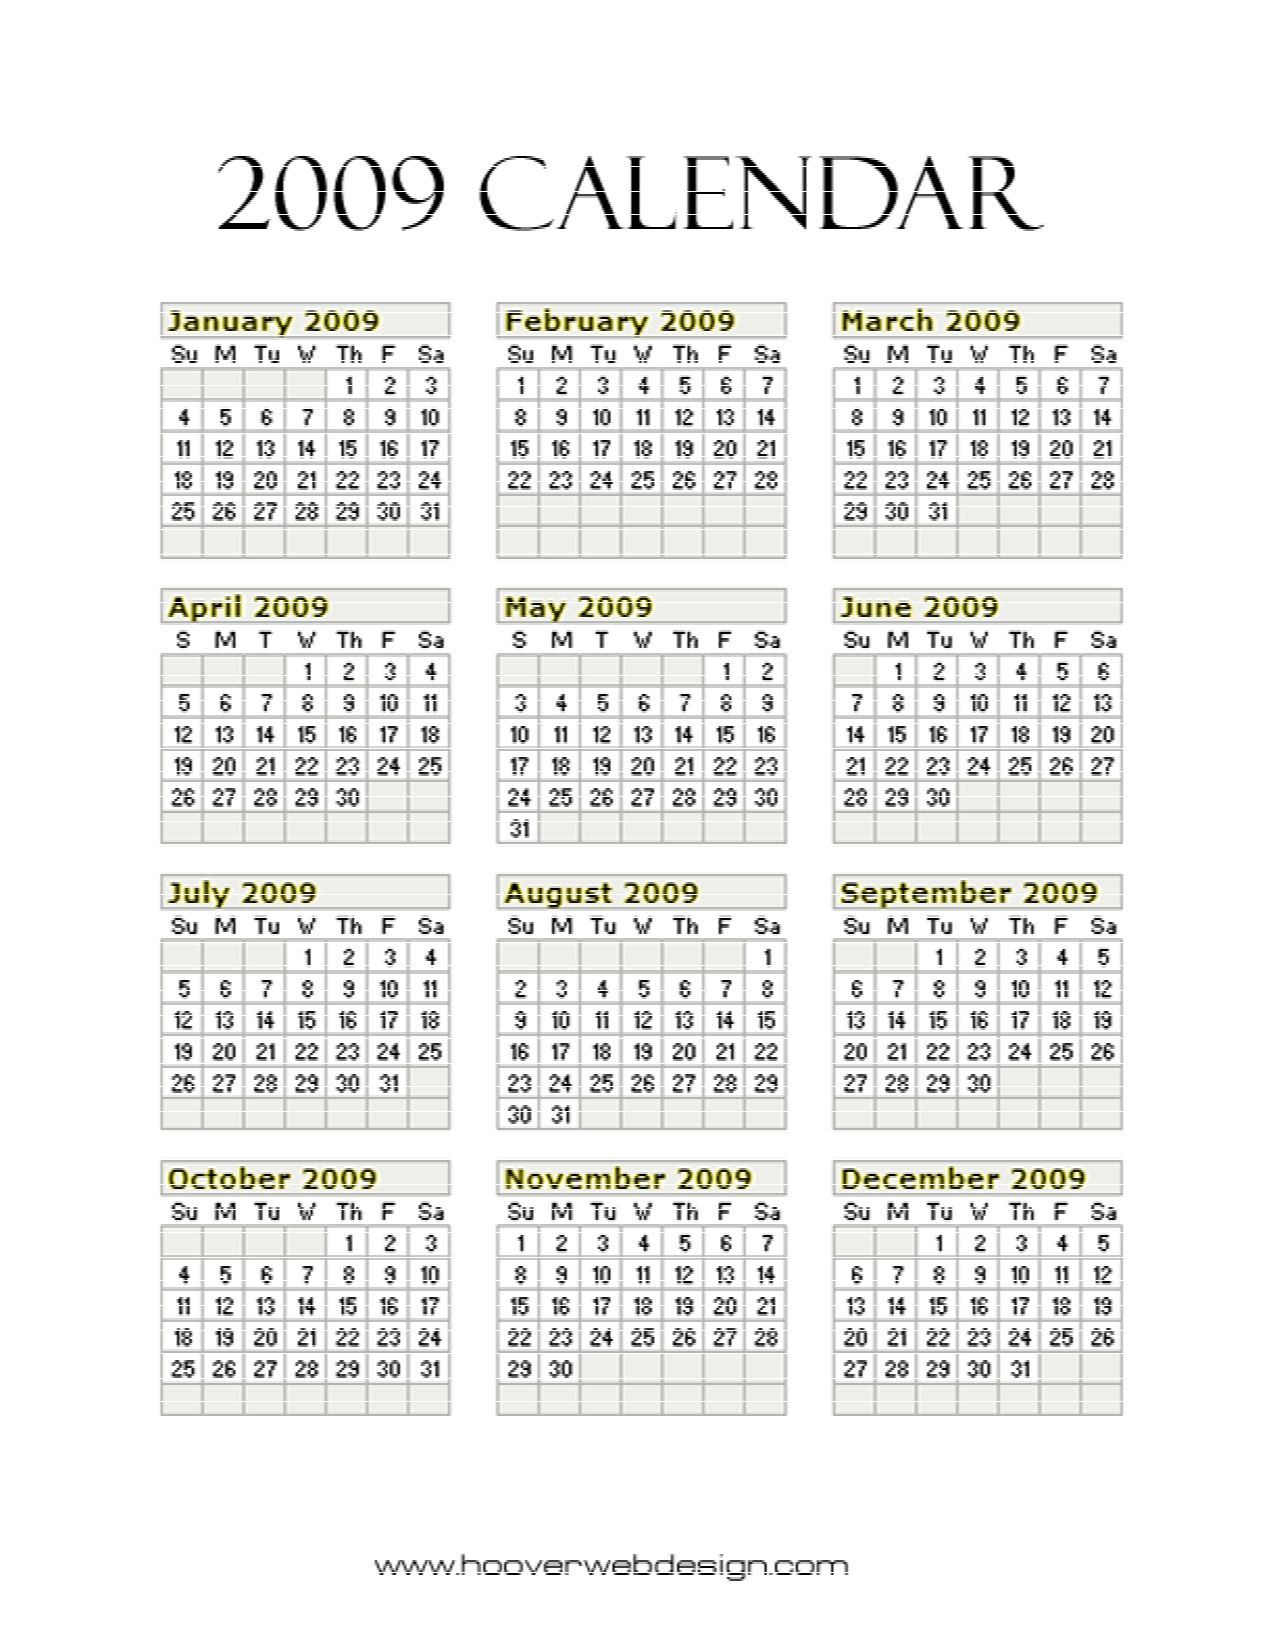 5 Best Images Of Free Printable Year Calendar 2009 2009 Calendar Printable Free 2009 Calendar